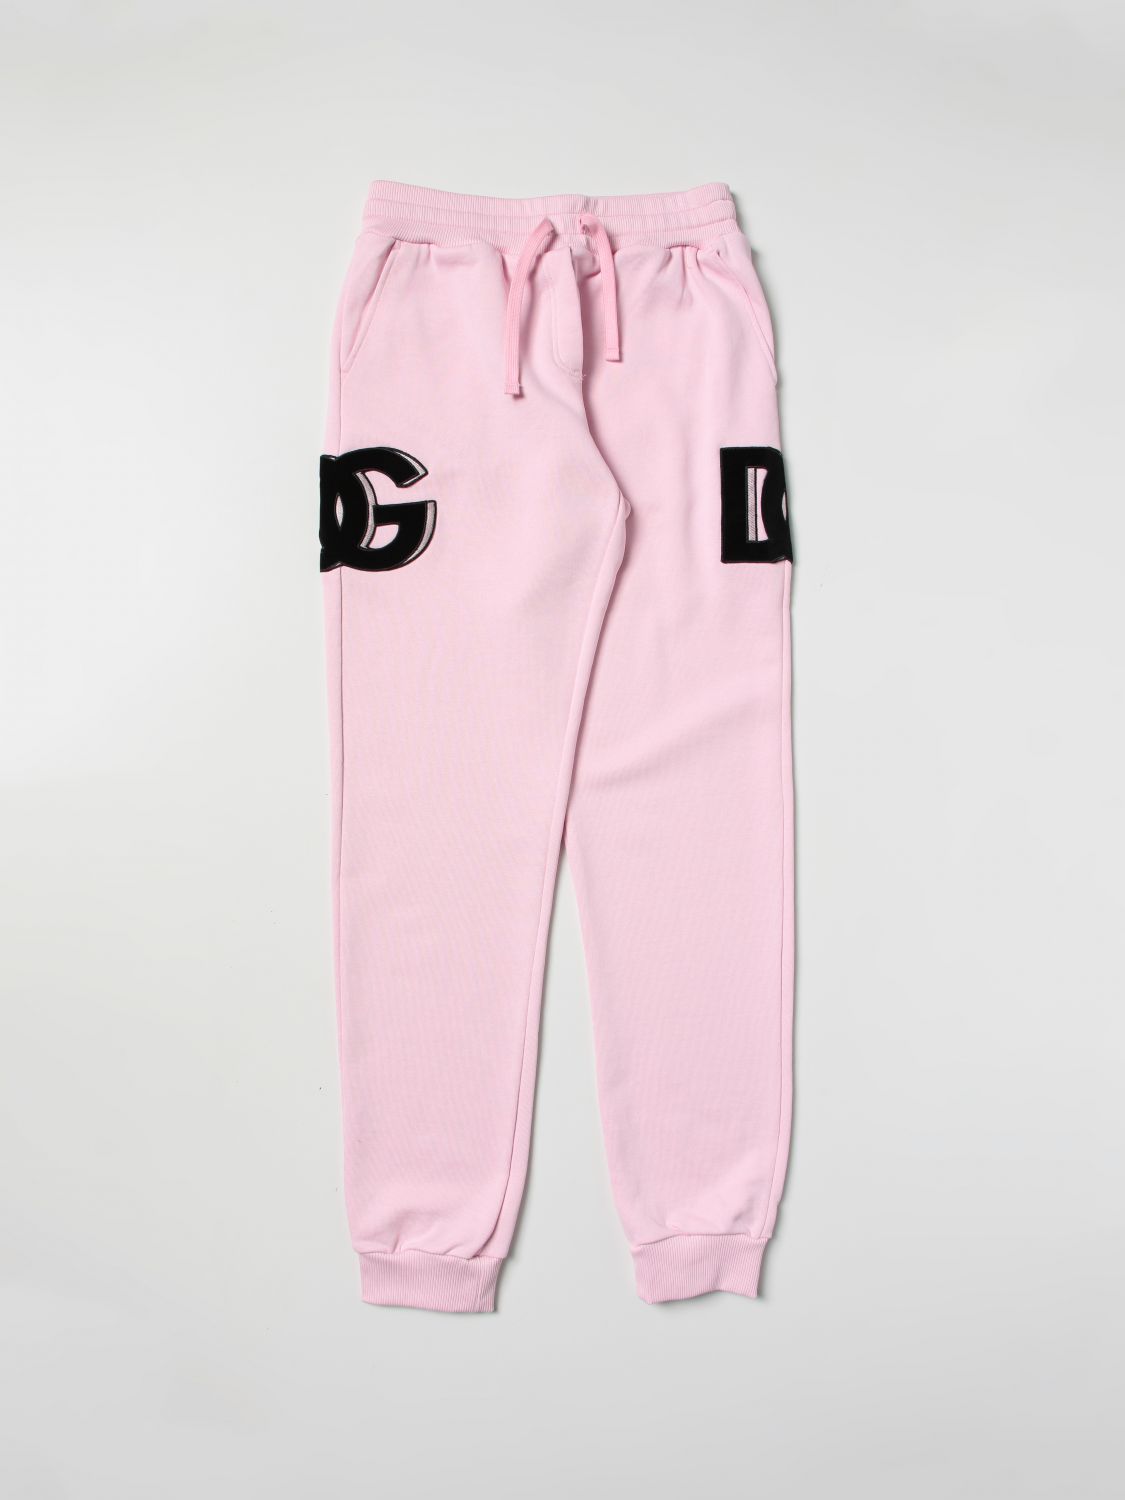 Dolce & Gabbana Kids' Cotton Pants In Baby Pink